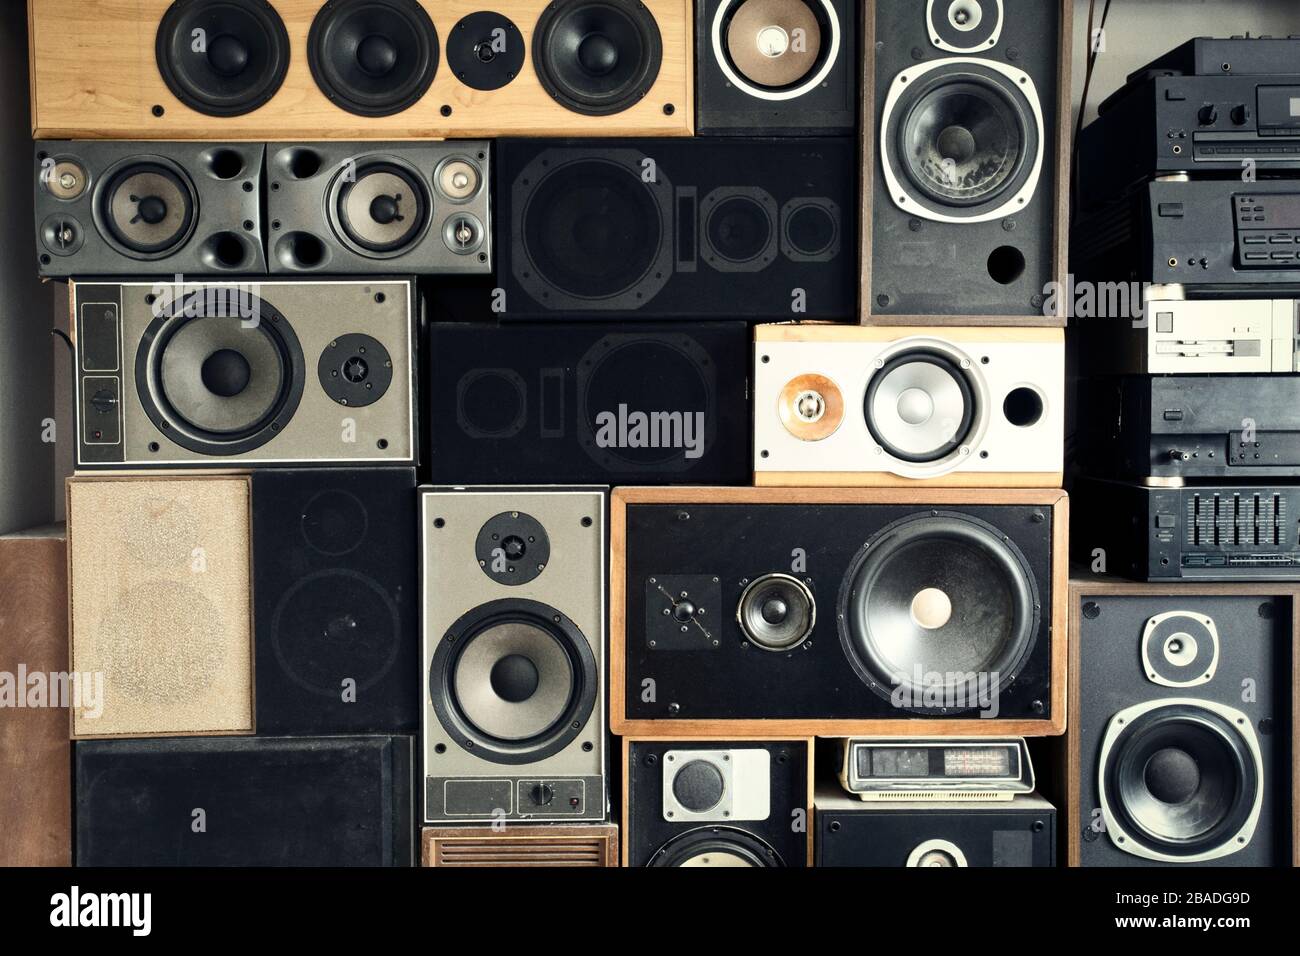 Altoparlanti per musica appesi al muro in stile vintage retrò, casse audio  impilate moderne Foto stock - Alamy